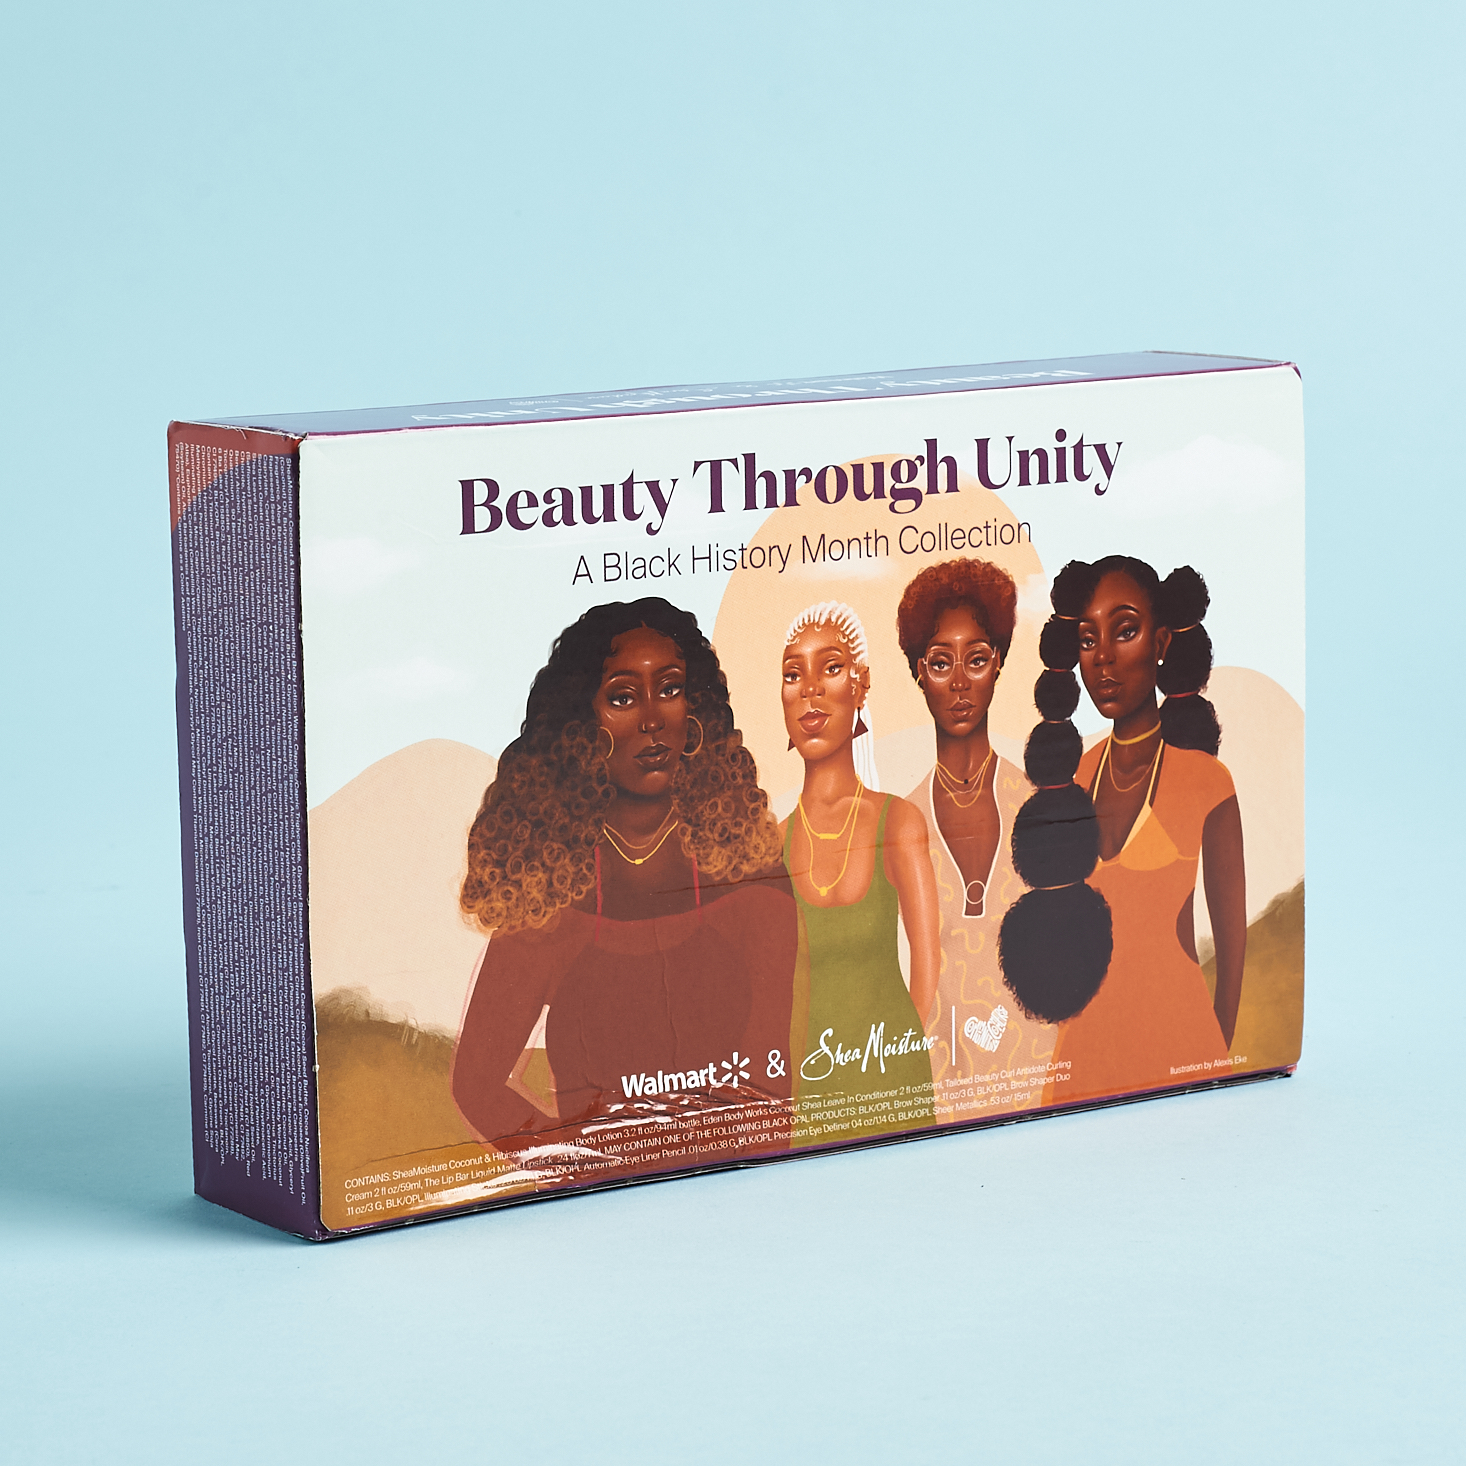 Walmart & Shea Moisture Limited Edition “Beauty Through Unity” Review – February 2021